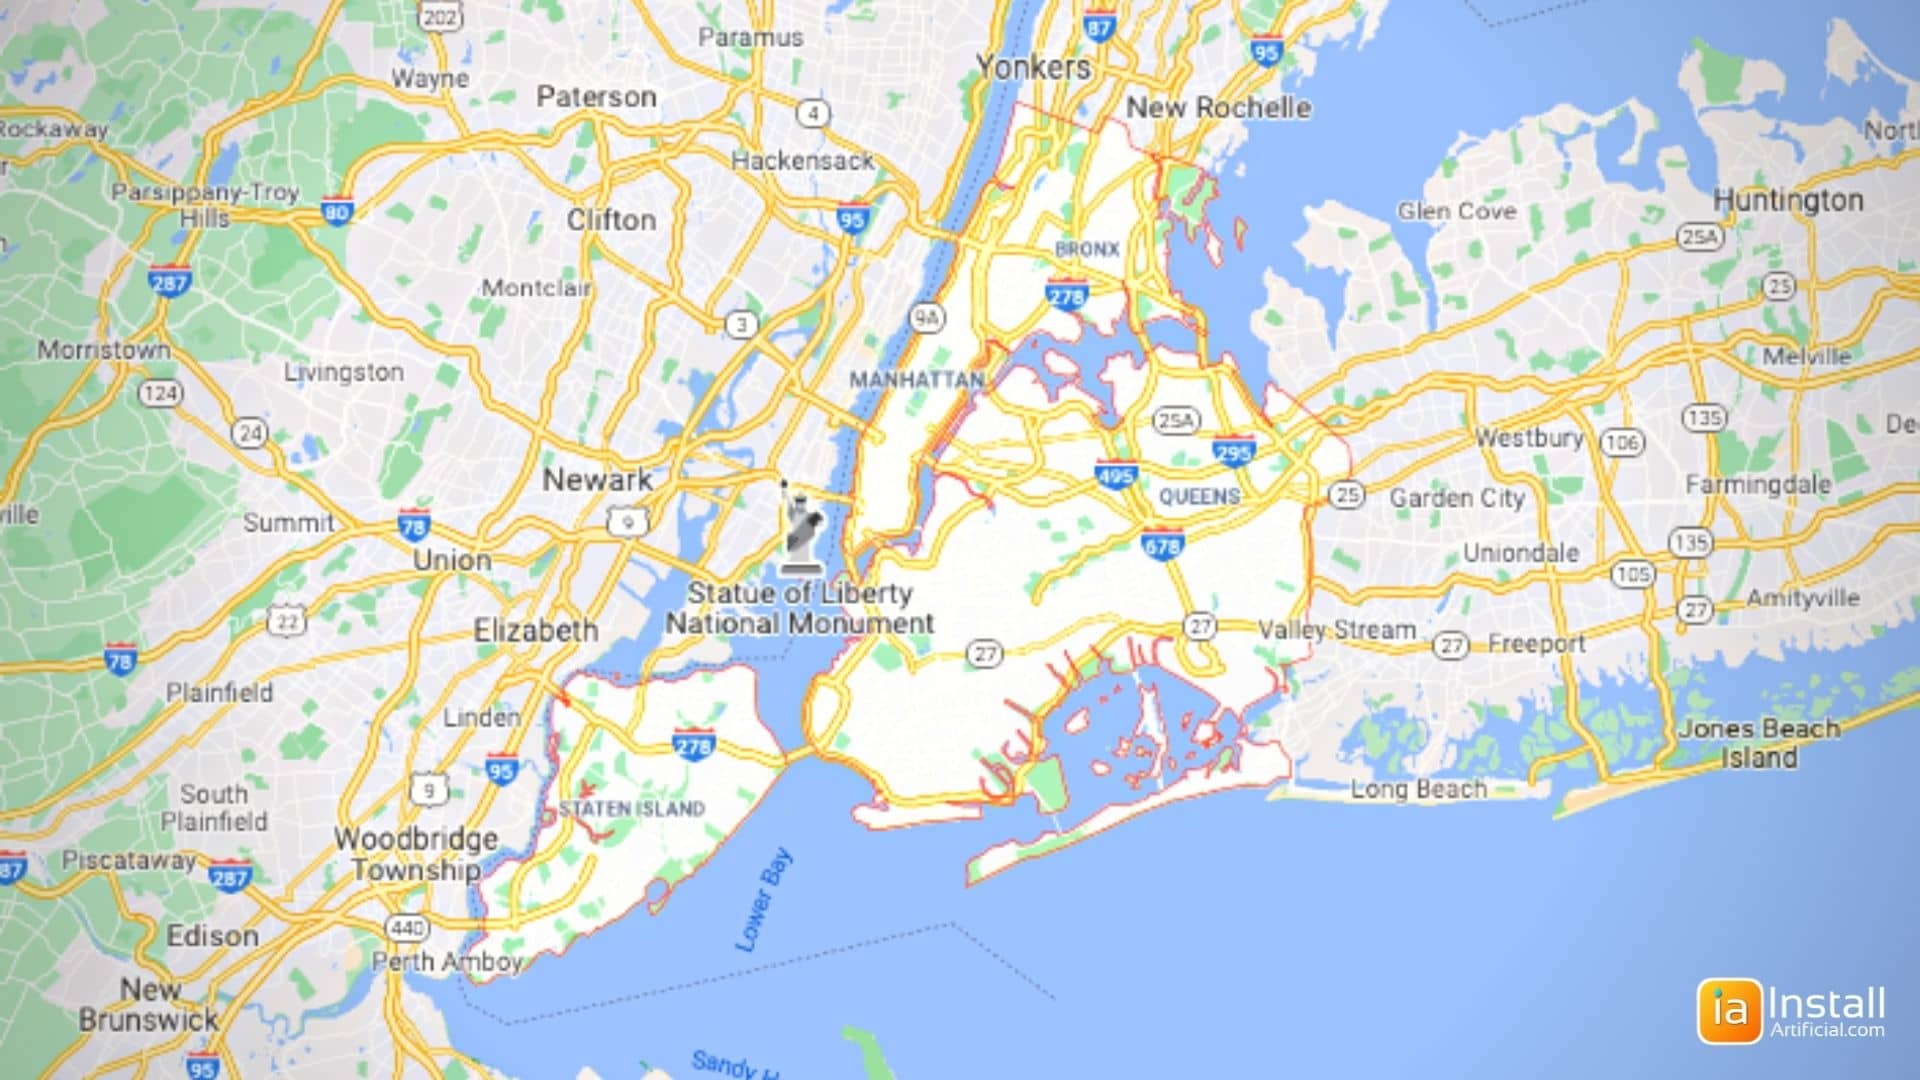 InstallArtificial Location Map - New York City New York 